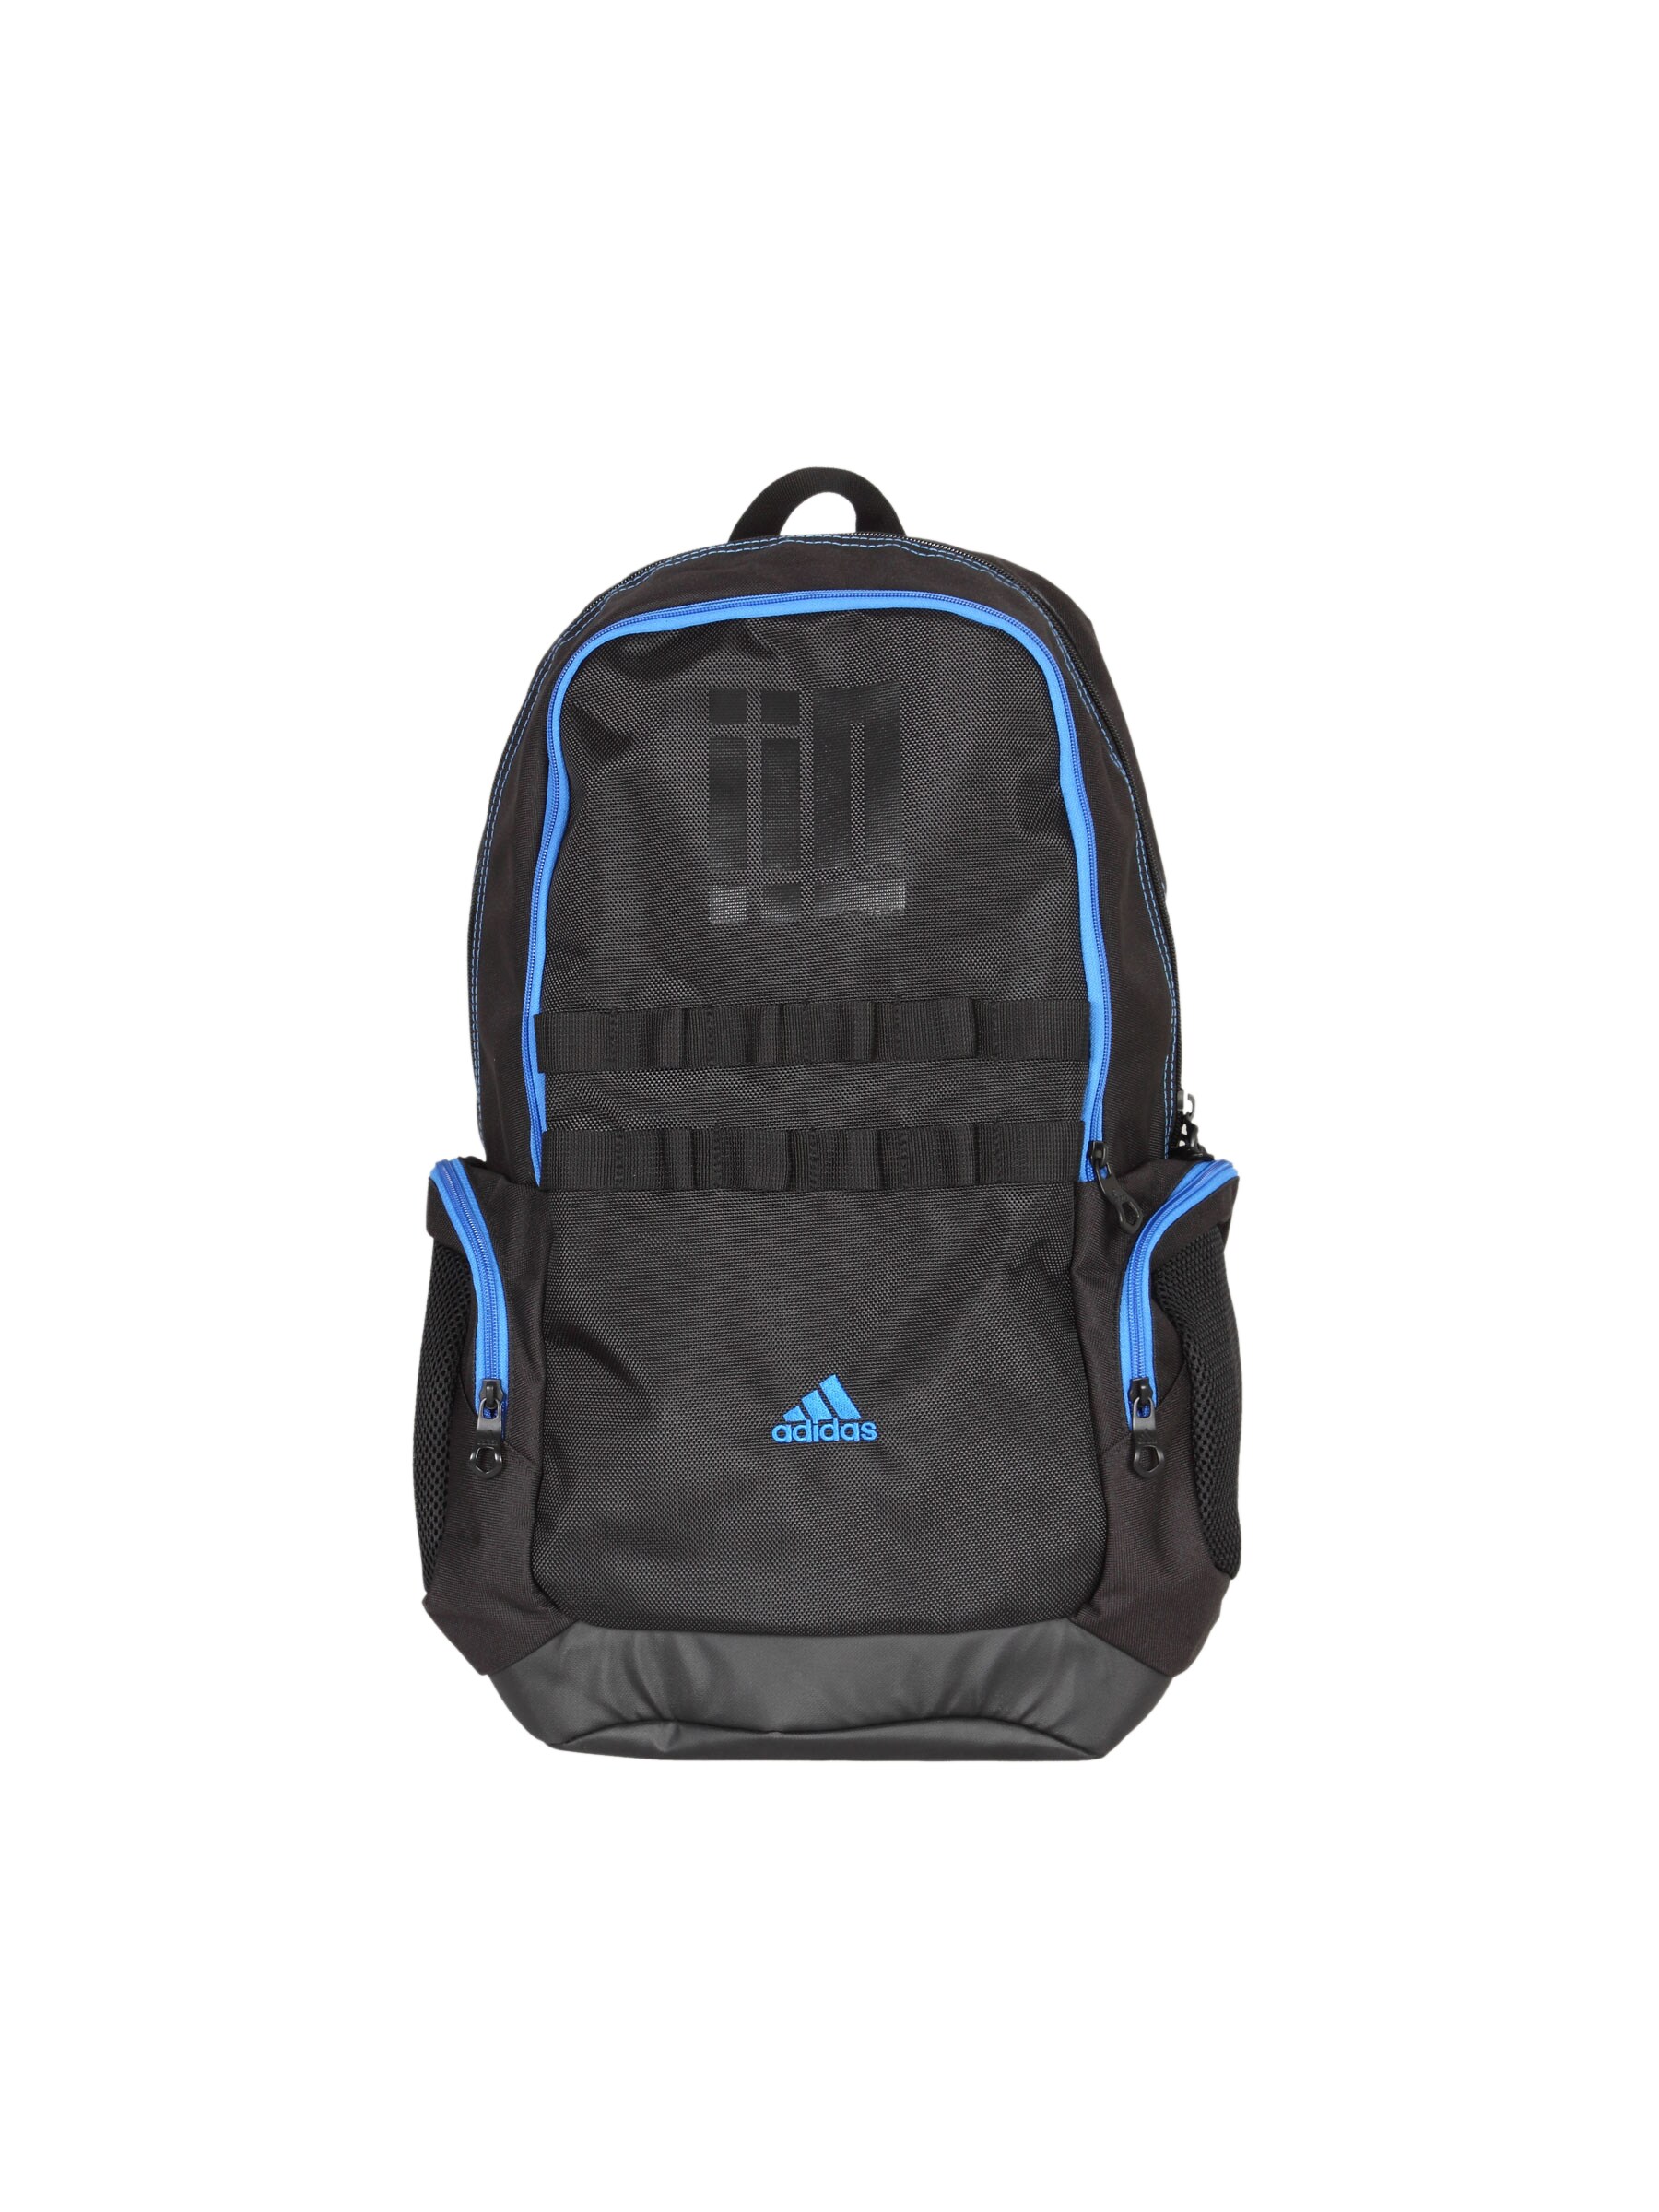 ADIDAS Men Adipure Black Blue Backpack